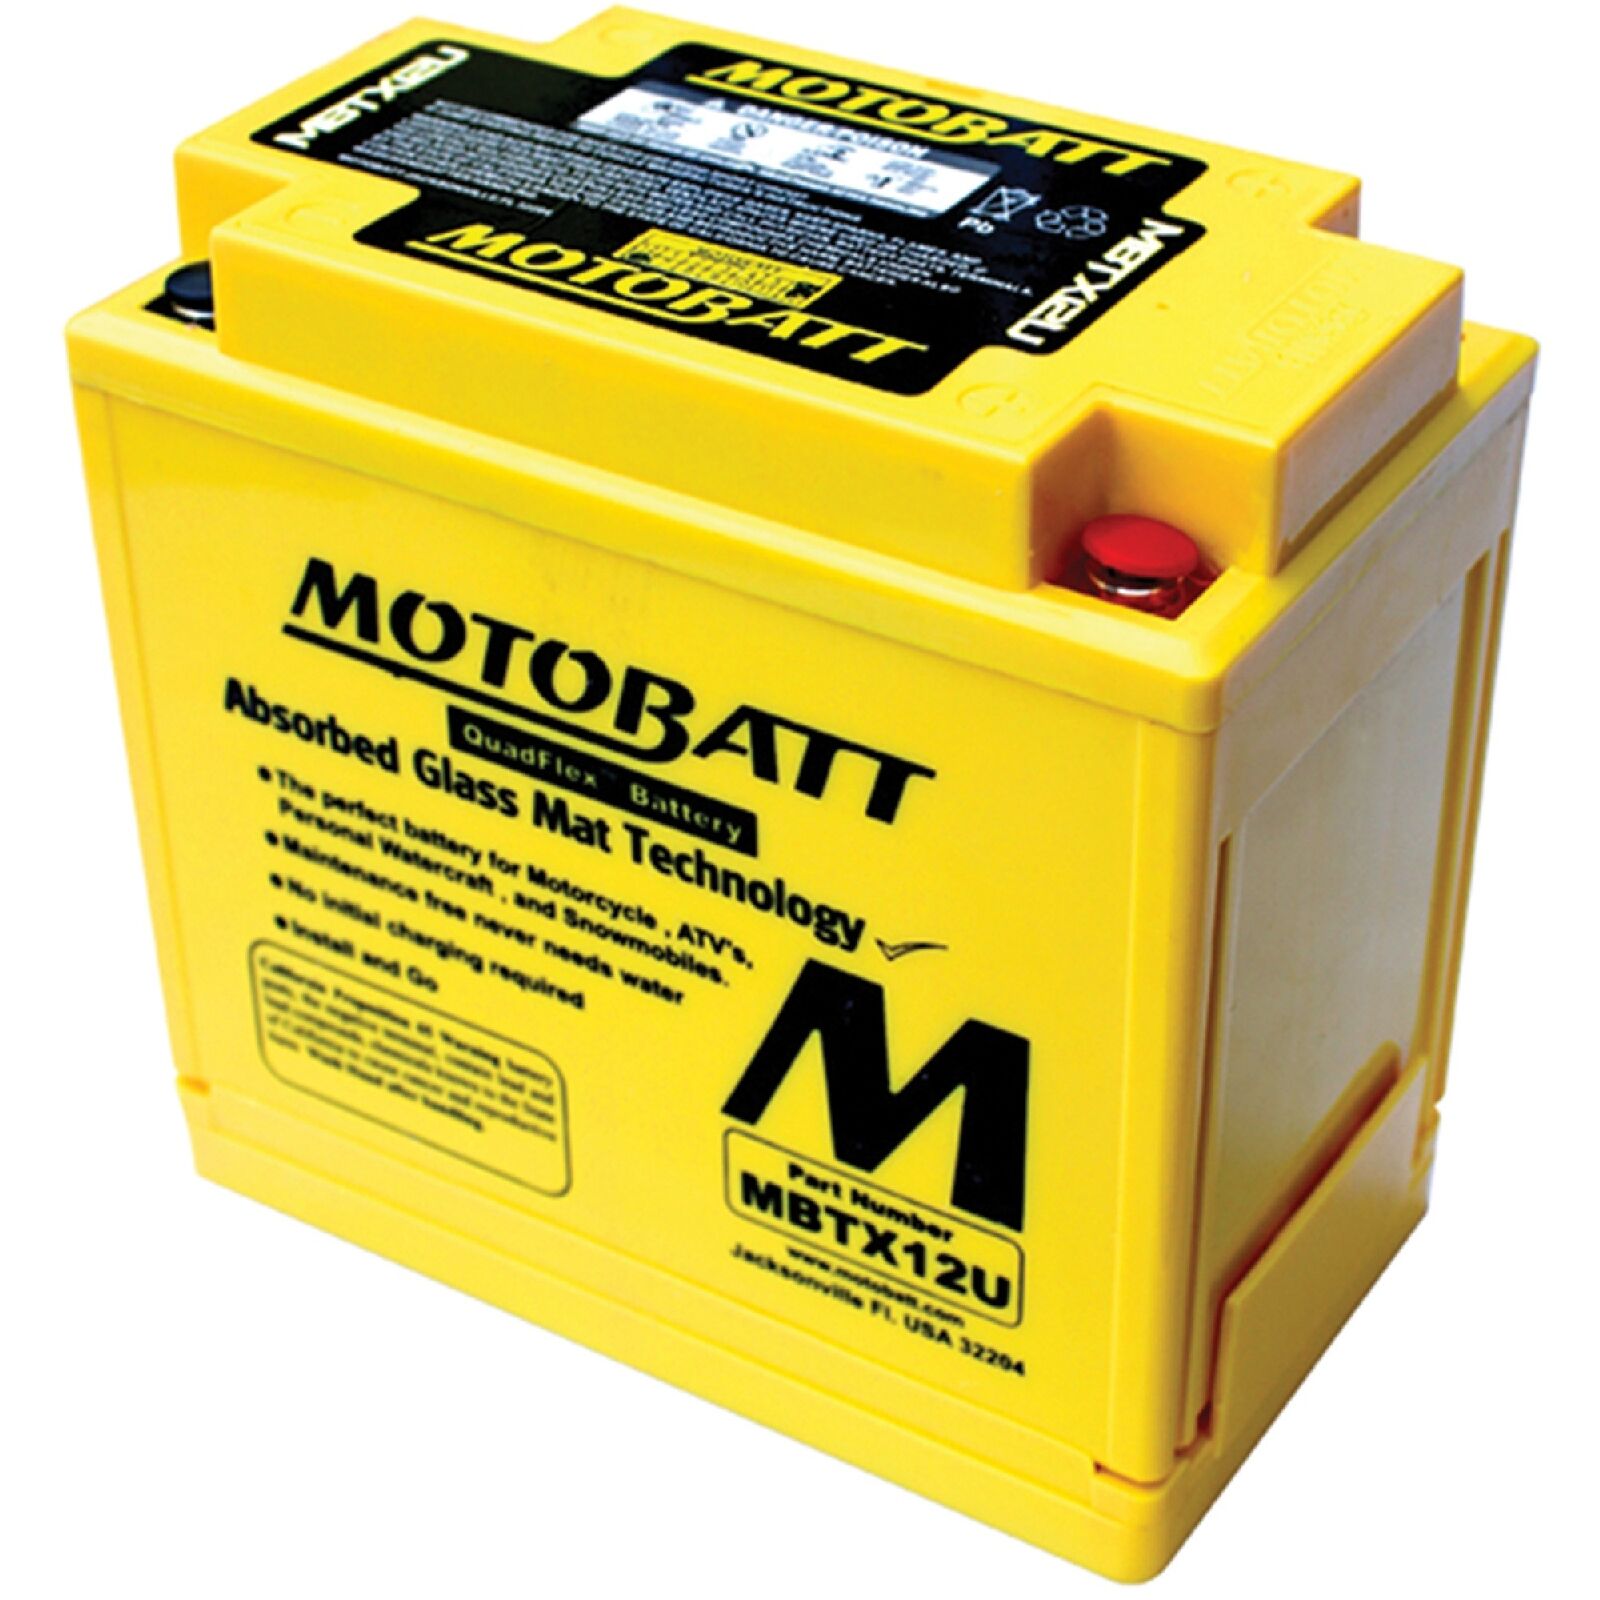 Motobatt Battery for BMW C650GT 650cc 11-14 MBTX12U